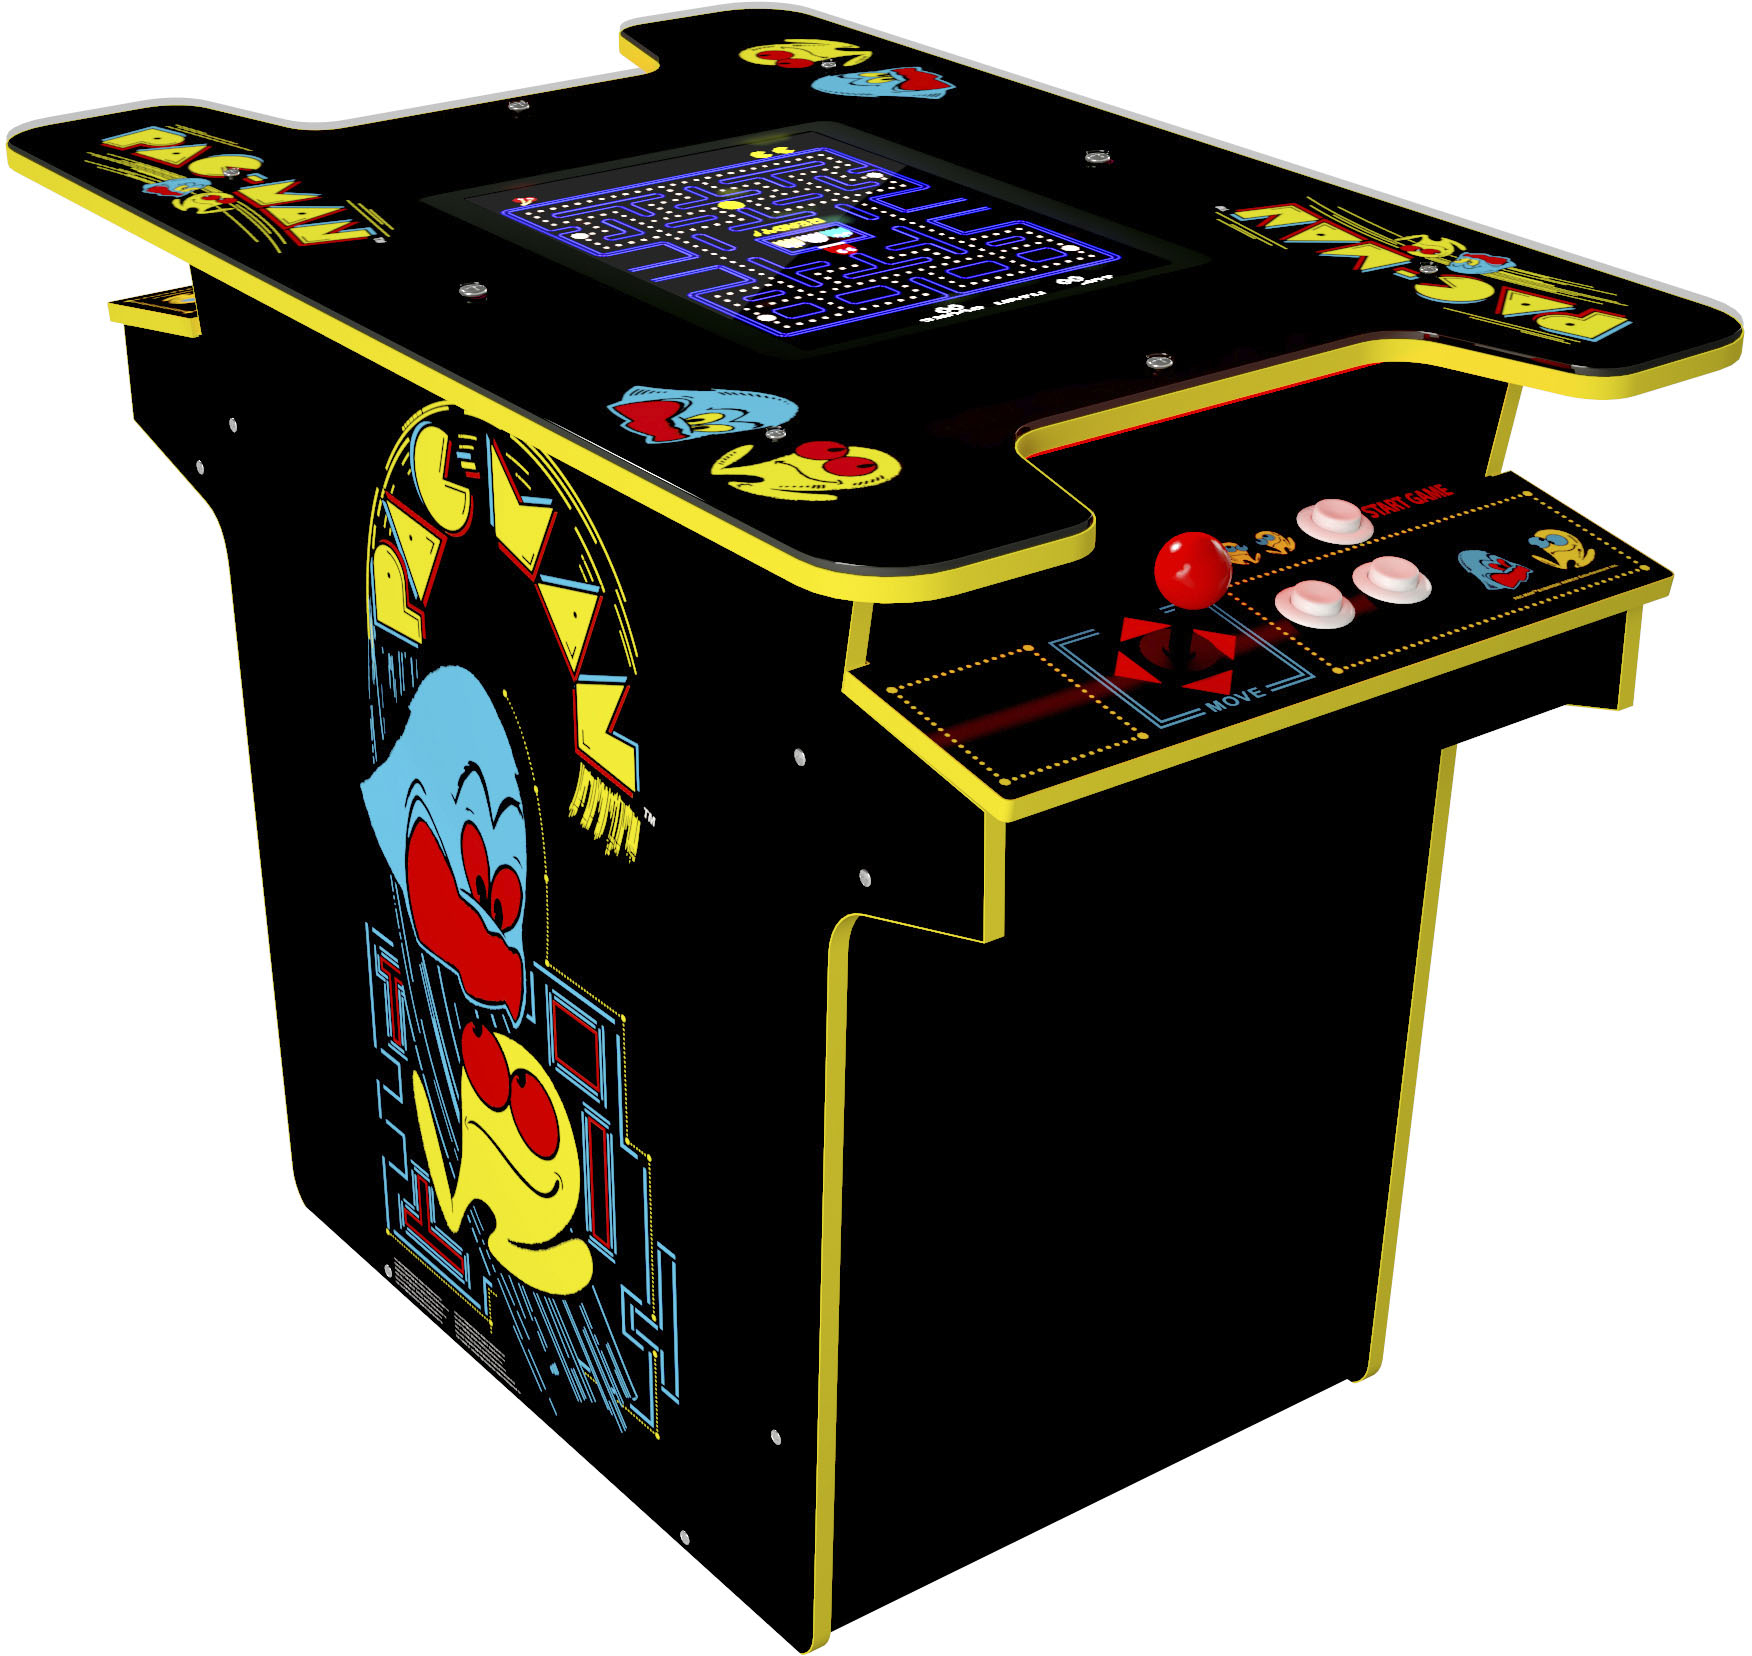 Galaxy MultiGame Tabletop Arcade Machine